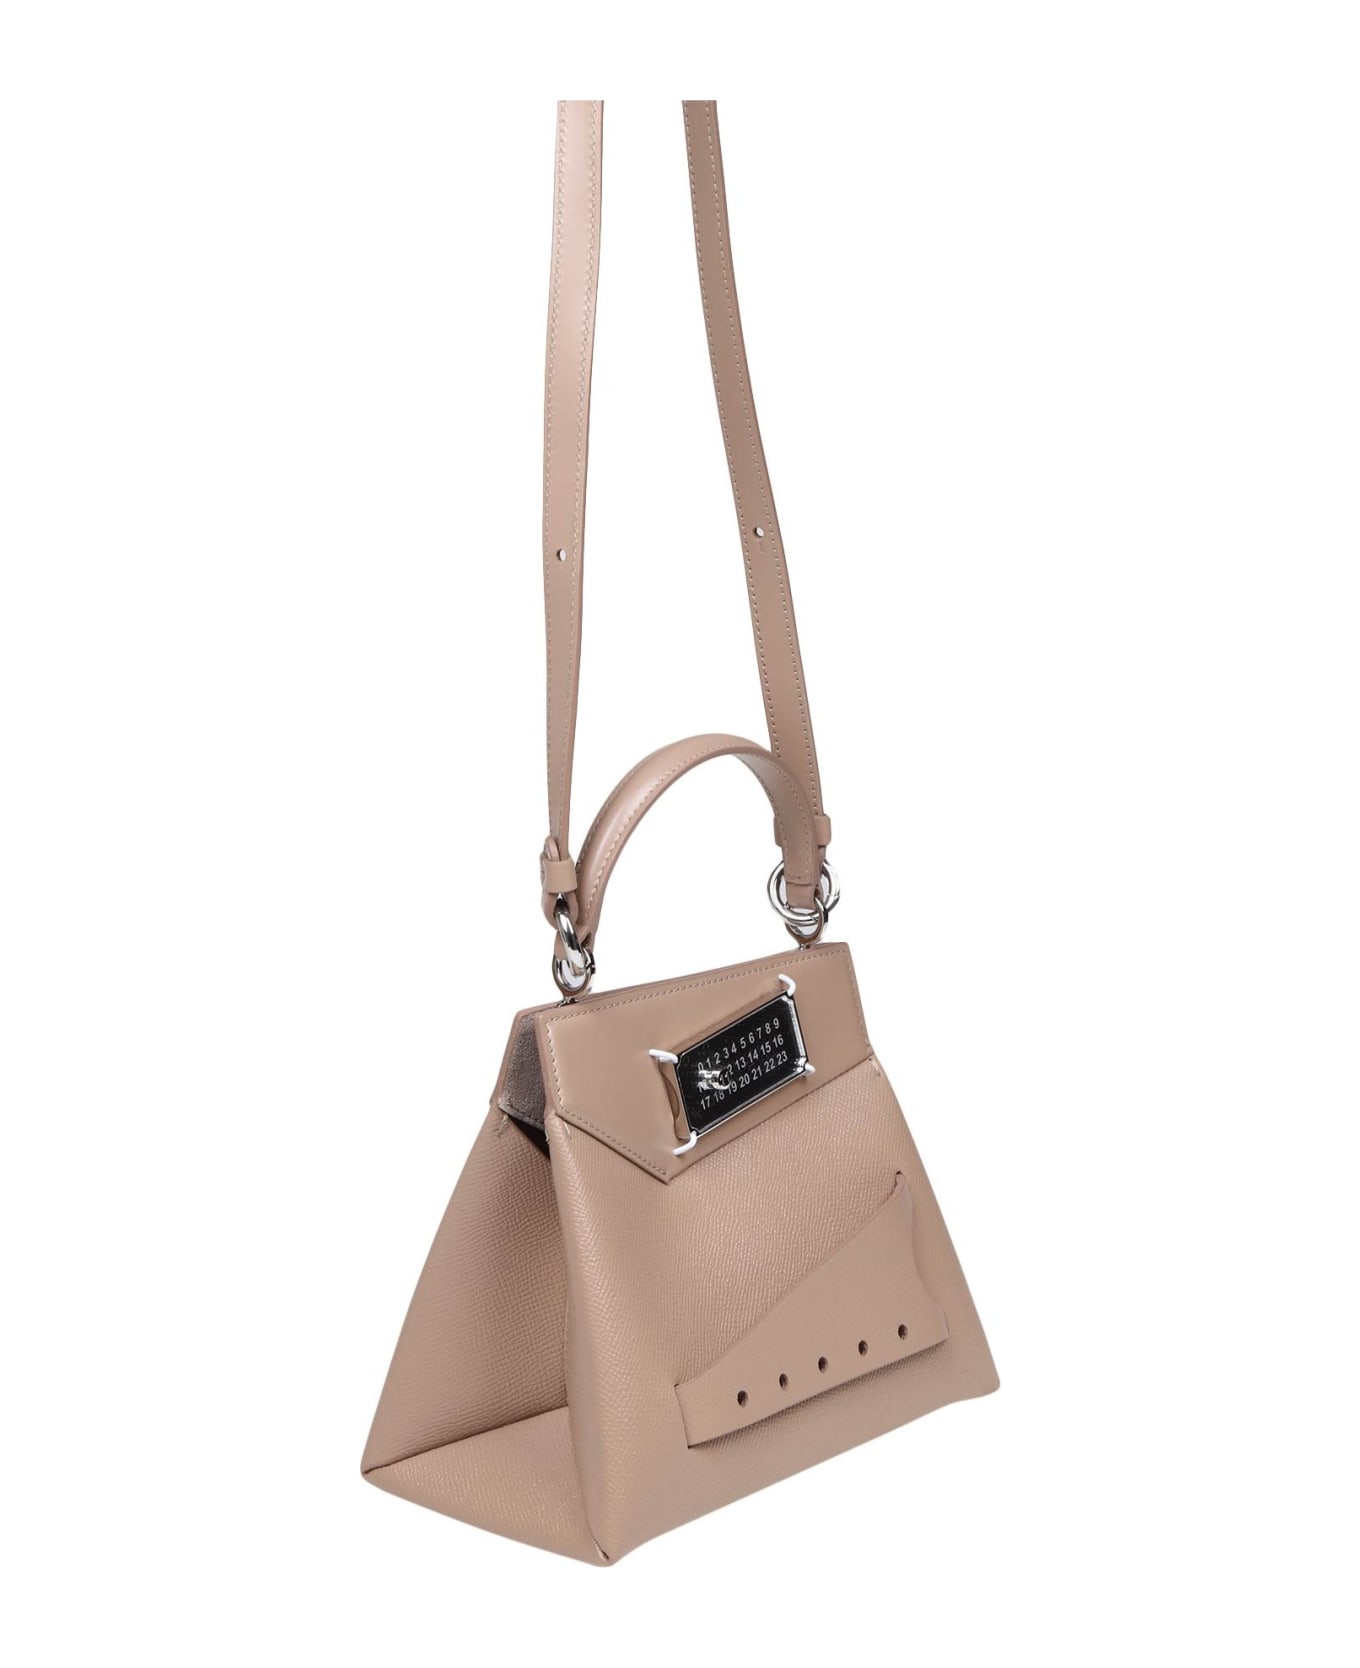 Maison Margiela Small Snatched Handbag In Beige Leather - BEIGE